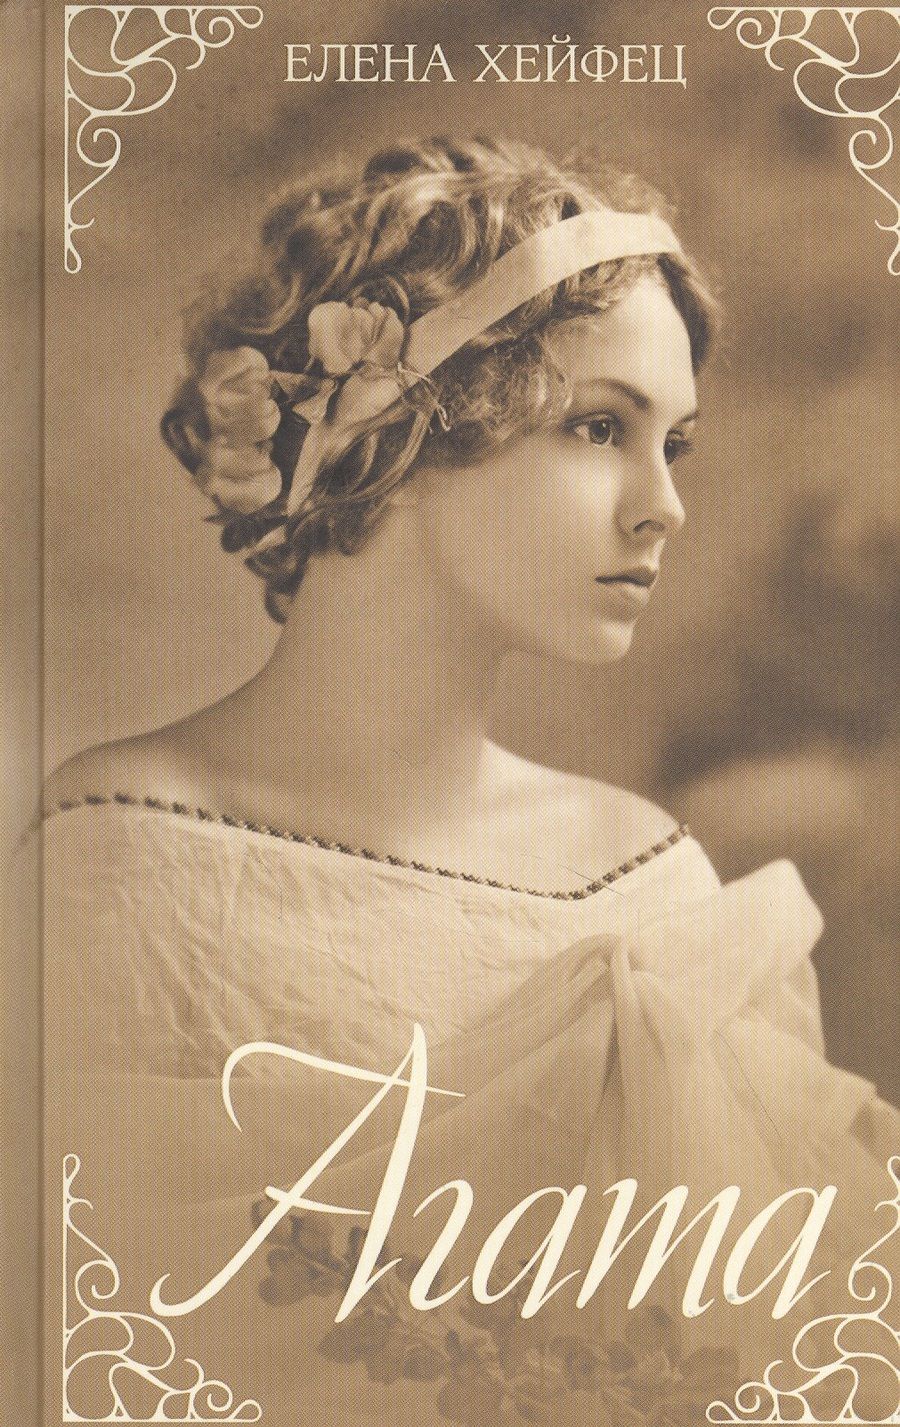 Обложка книги "Елена Хейфец: Агата"